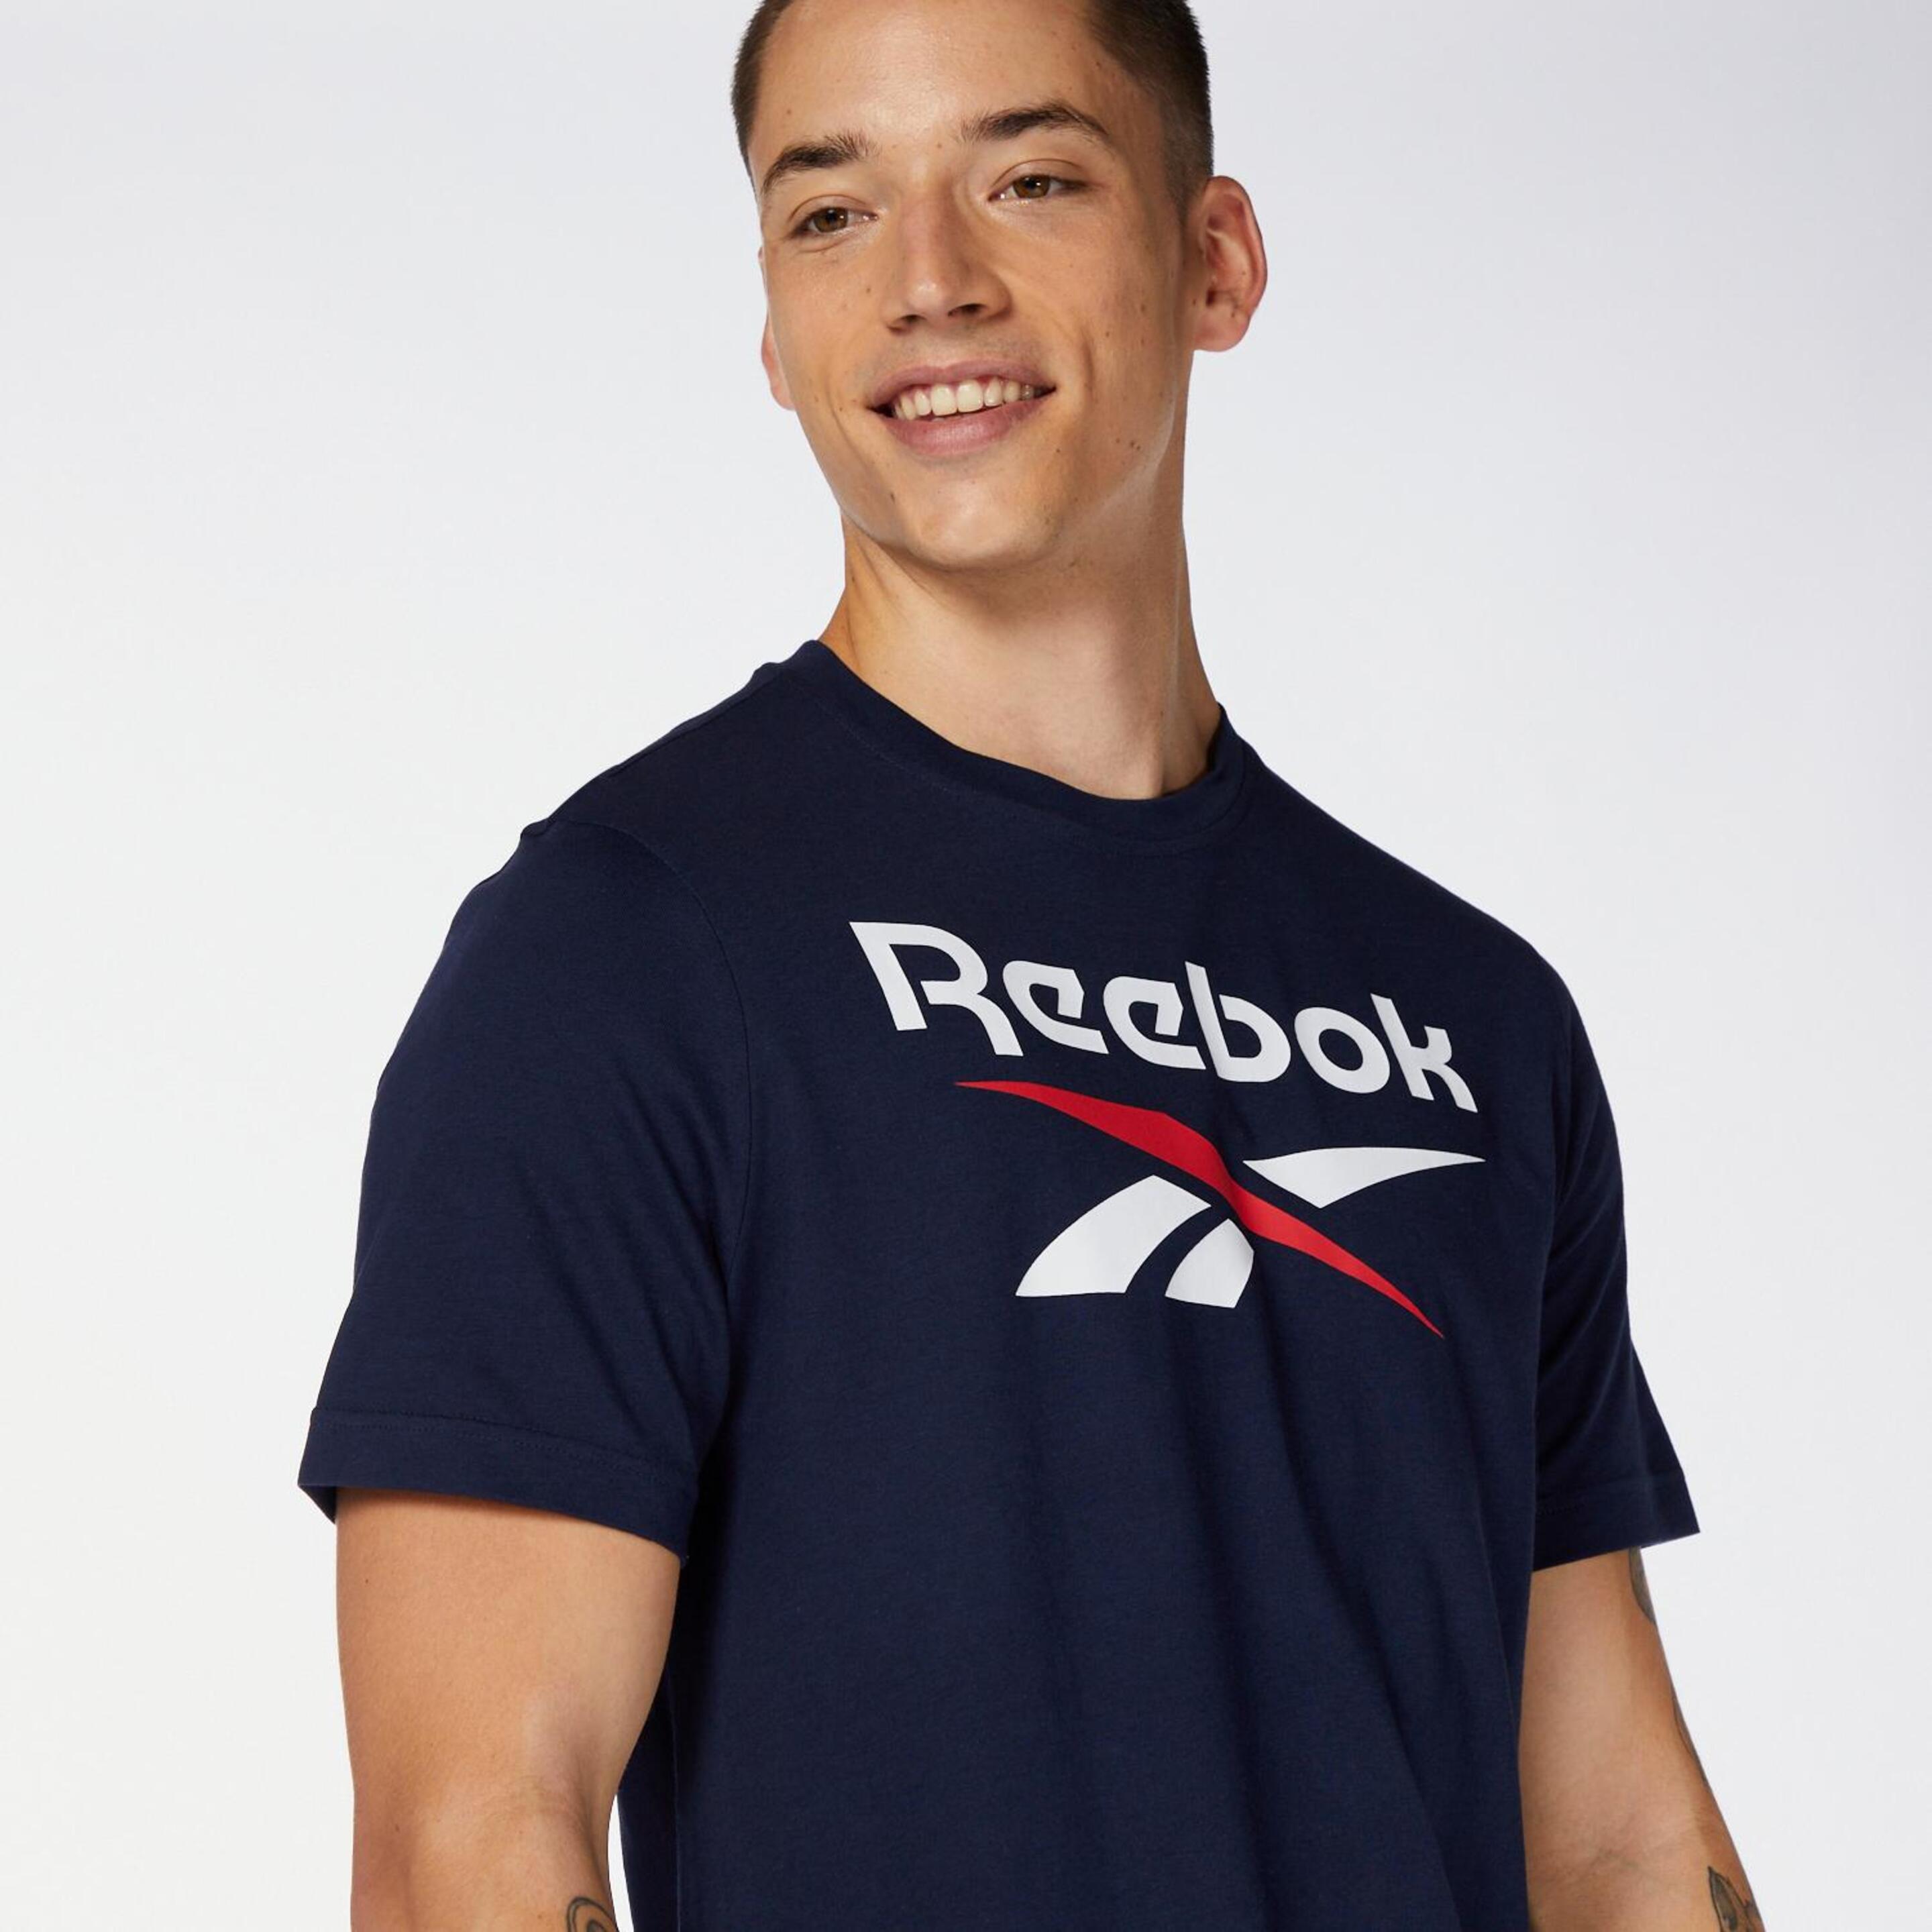 Reebok Biglogo - Marino - Camiseta Hombre